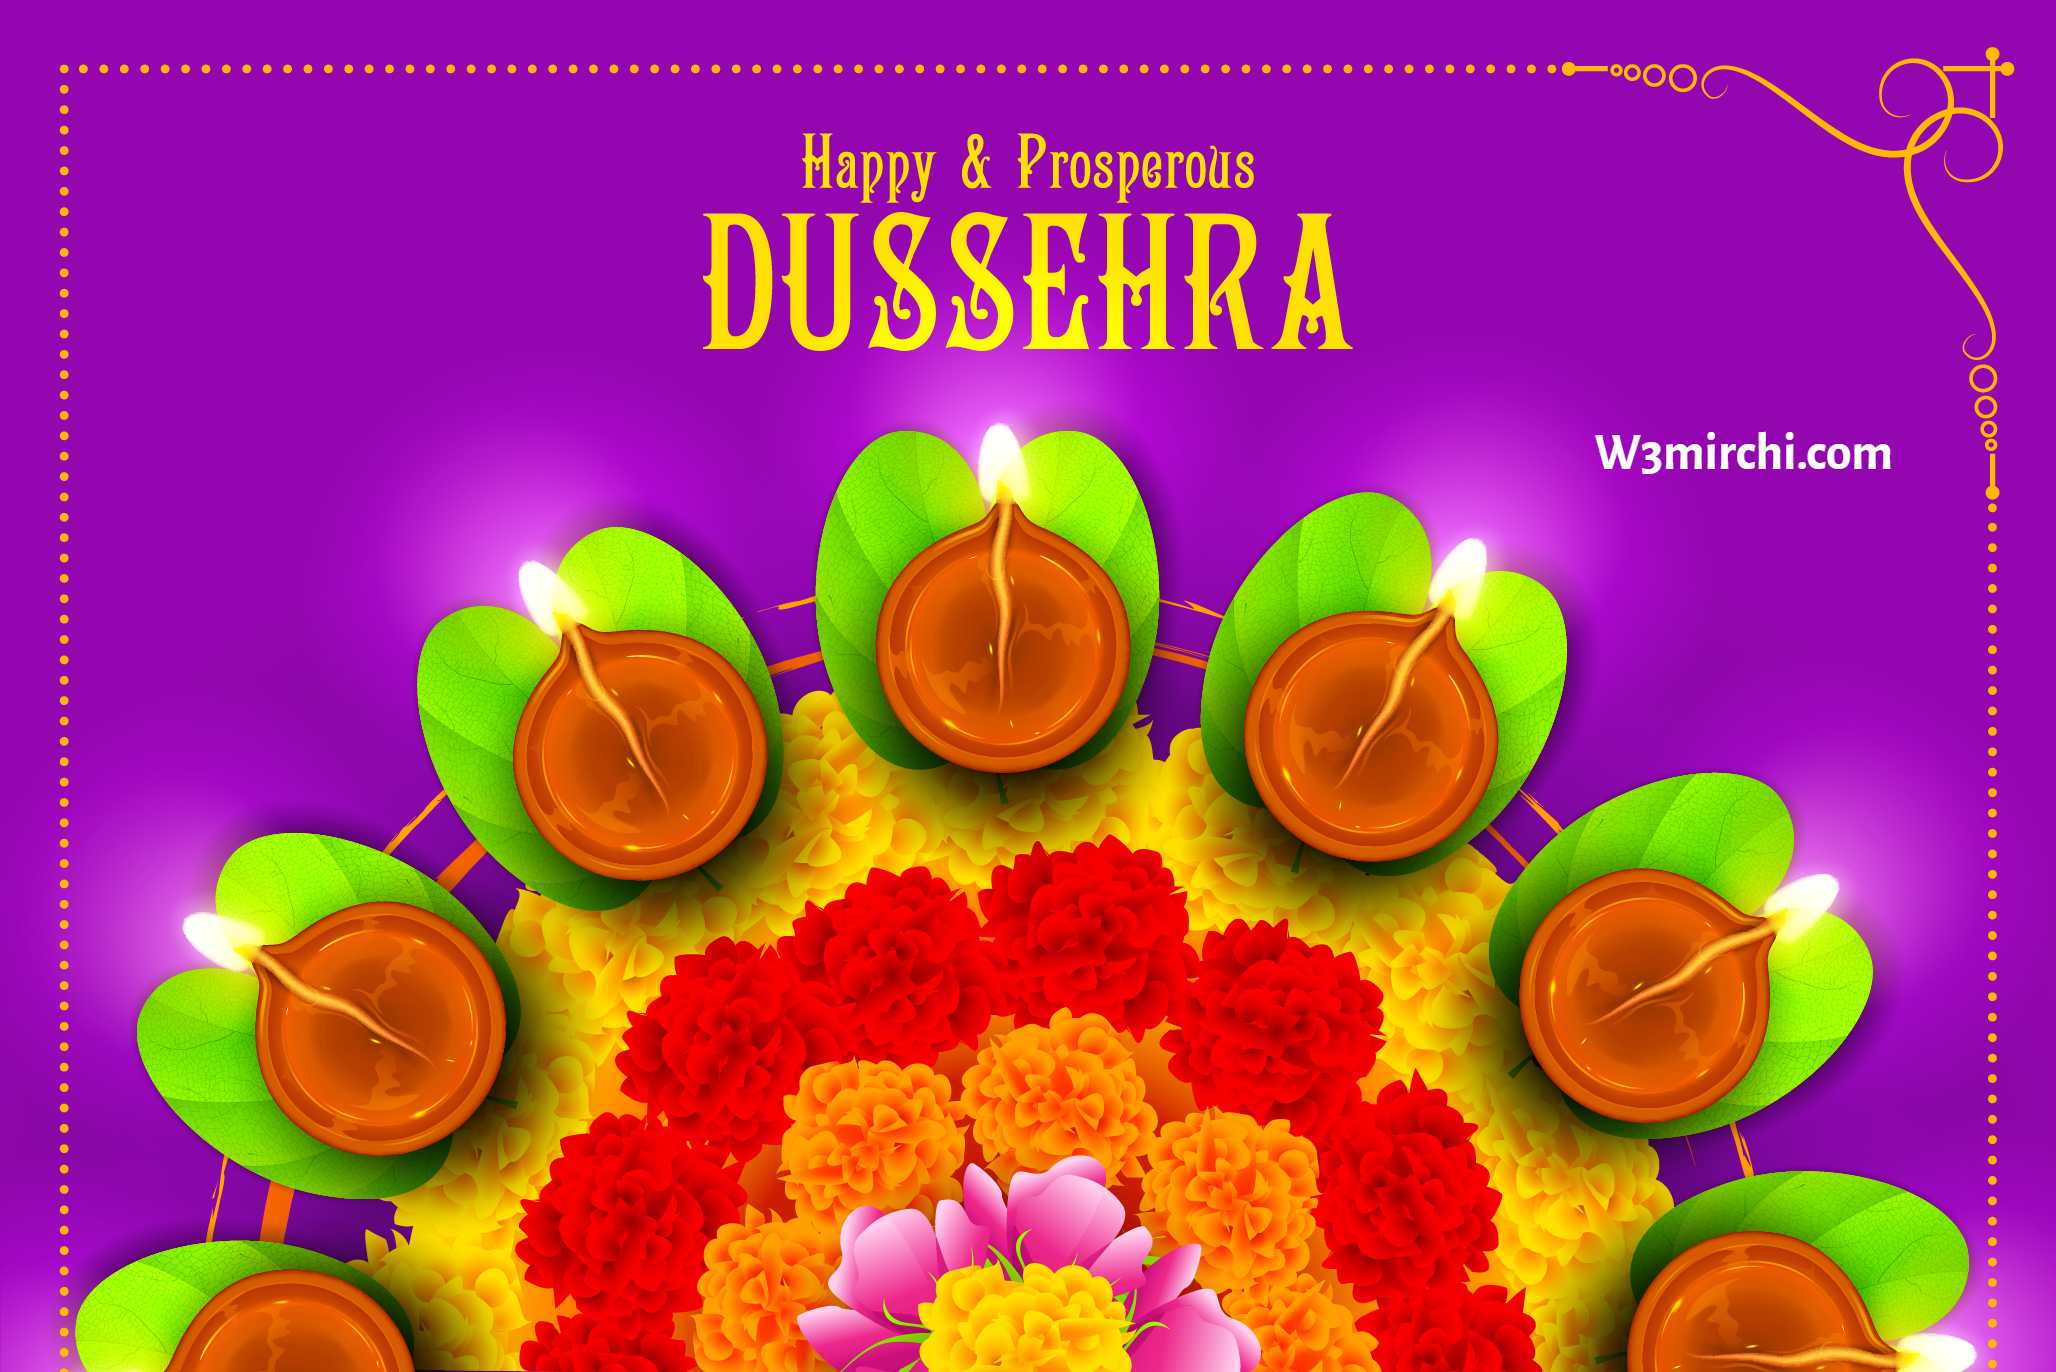 Happy & Prosperous Dussehra